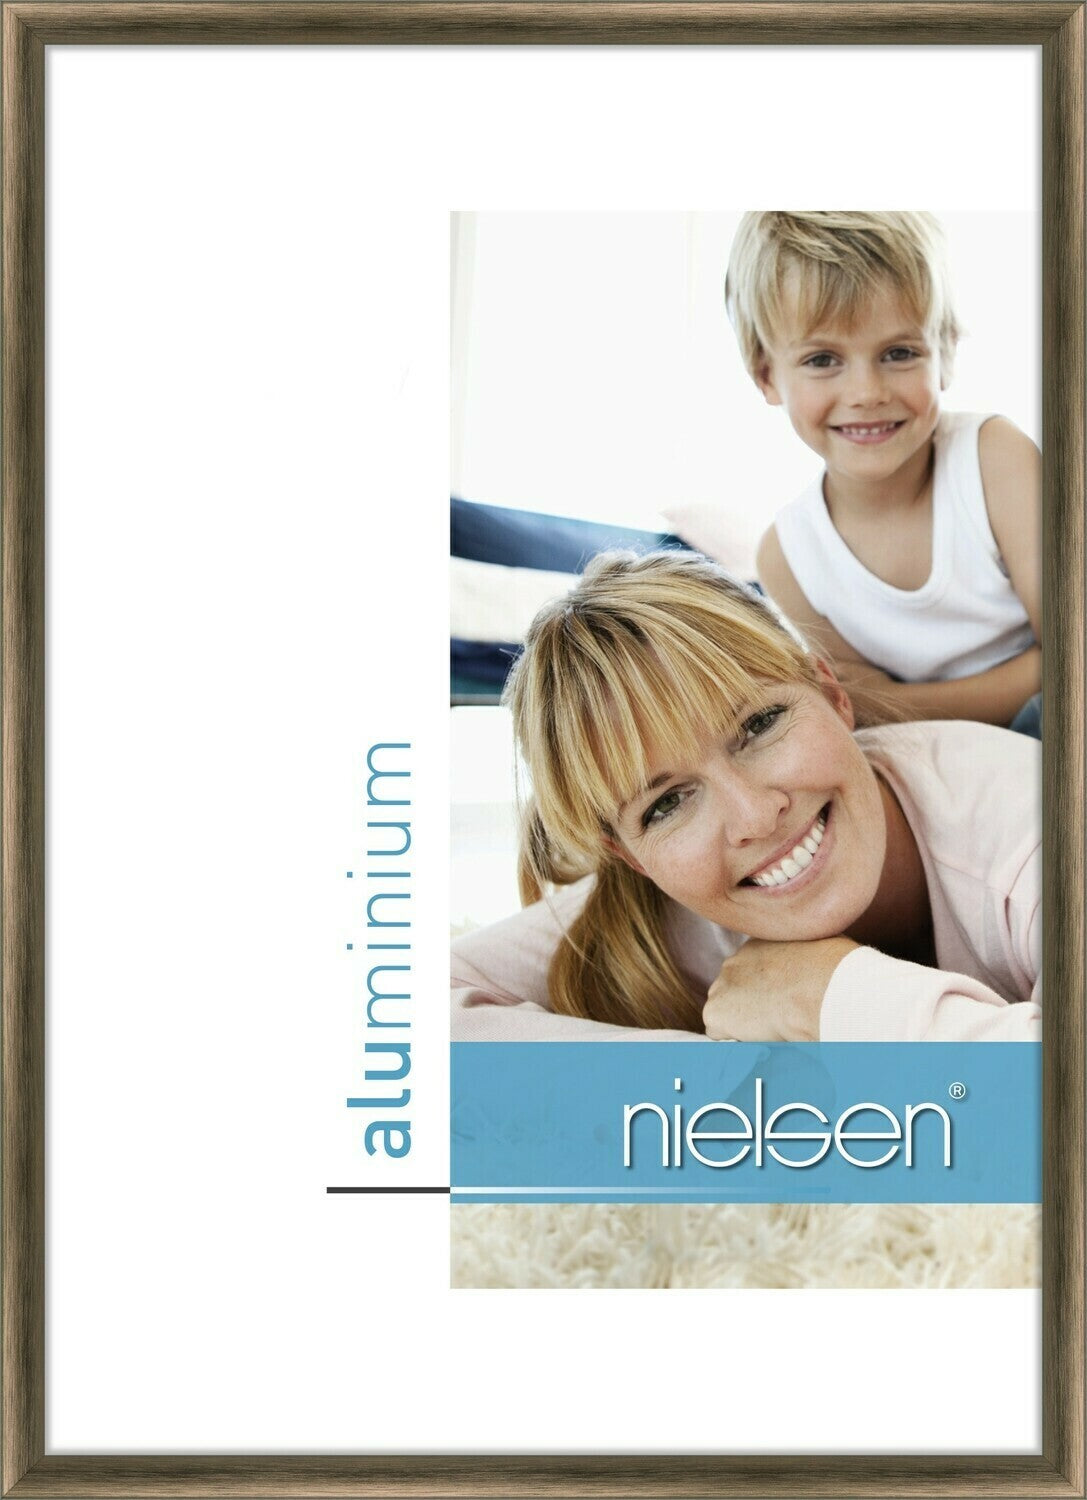 50x50 | Classic Nielsen Frames